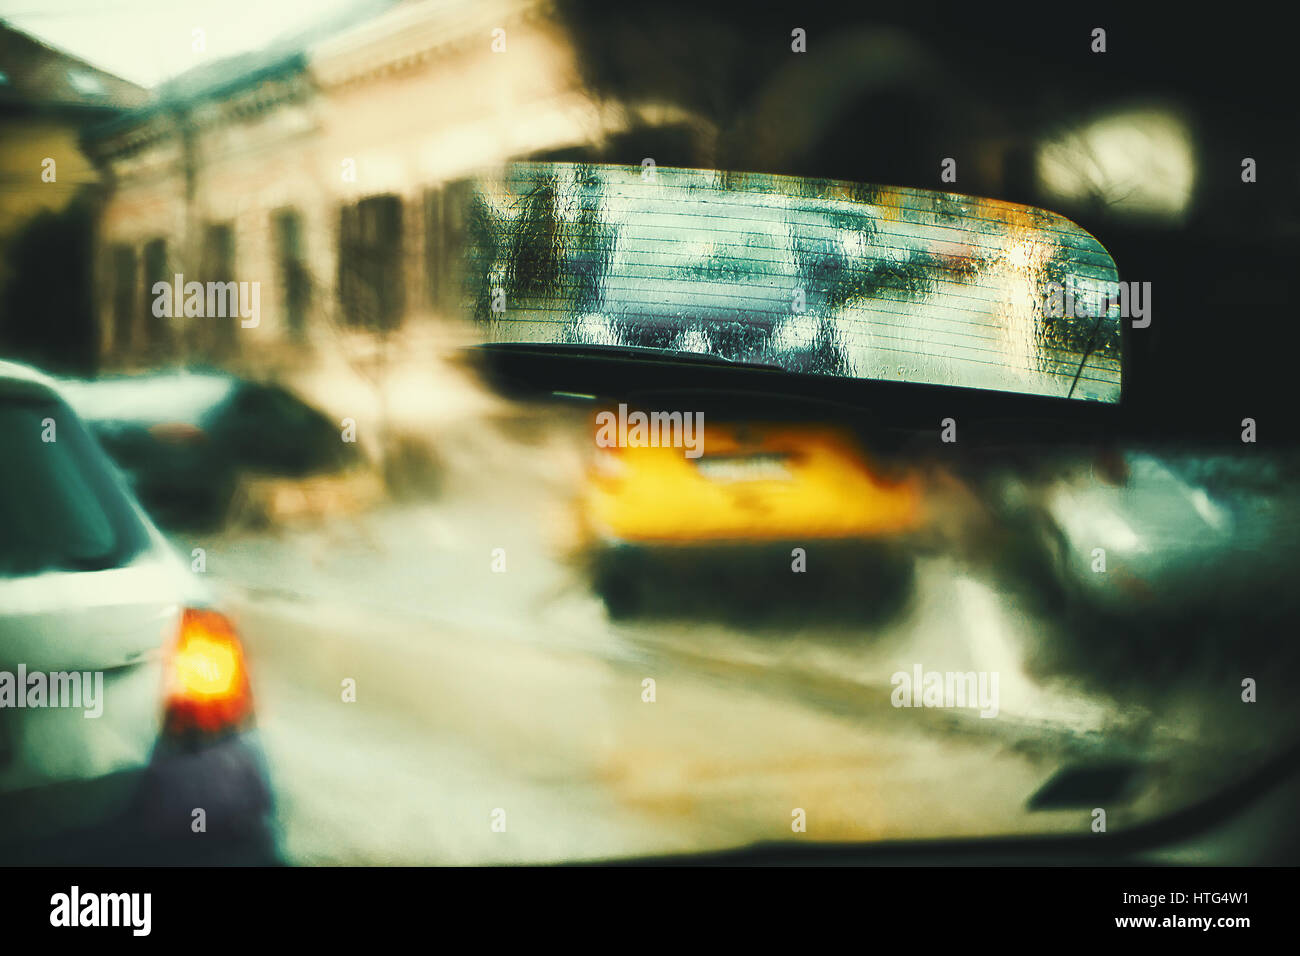 Rain car mirror -Fotos und -Bildmaterial in hoher Auflösung – Alamy